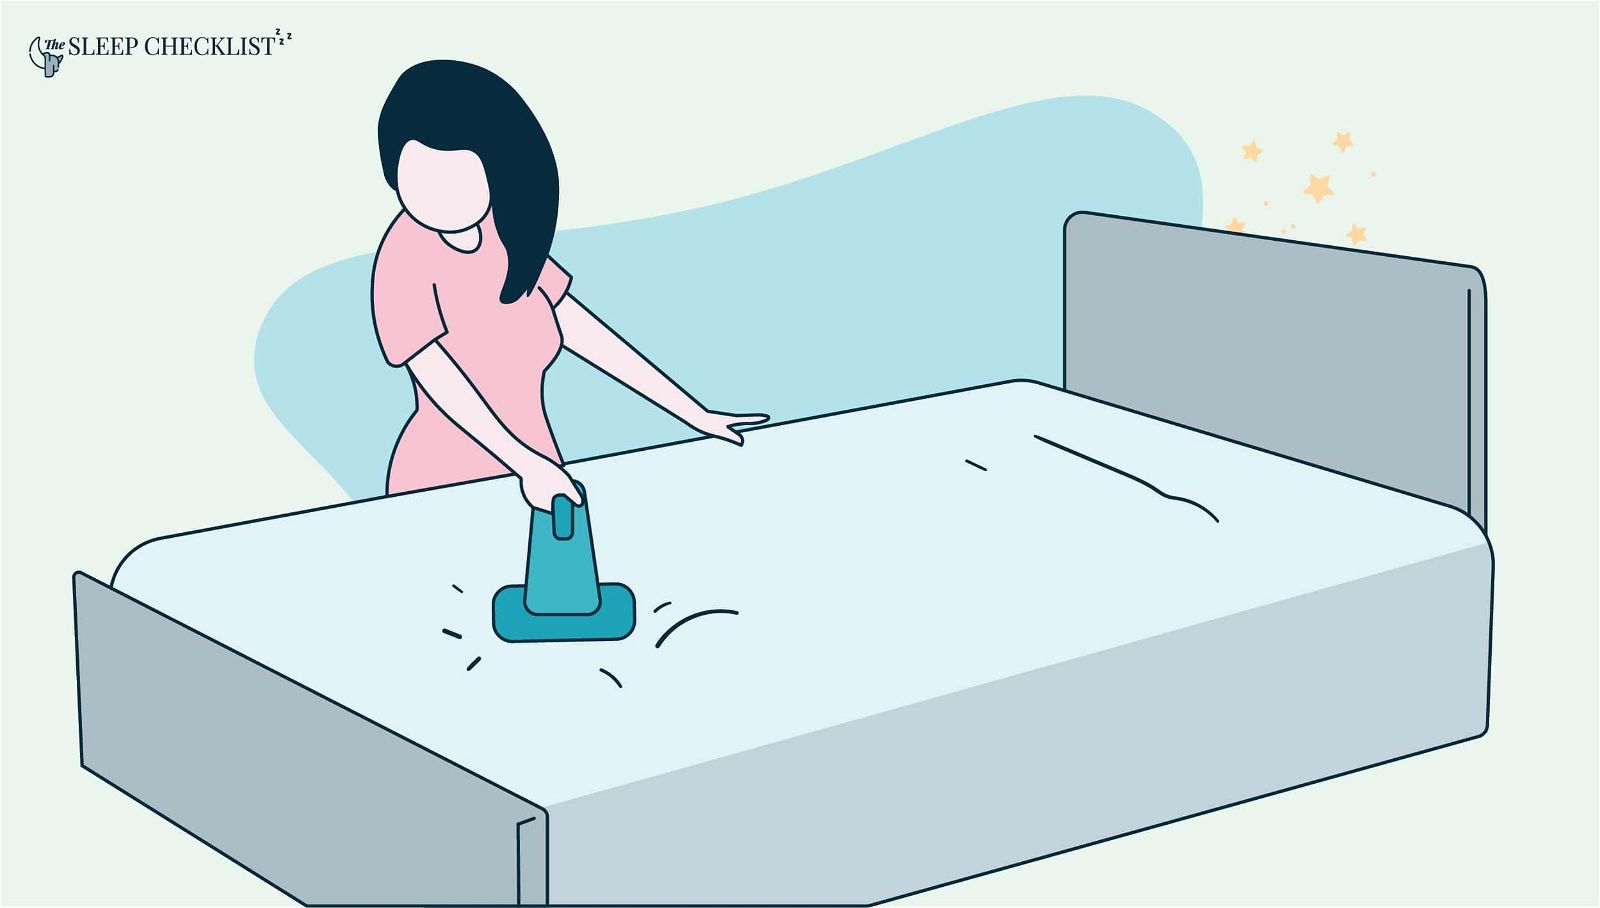 handheld vacuum being used on mattress